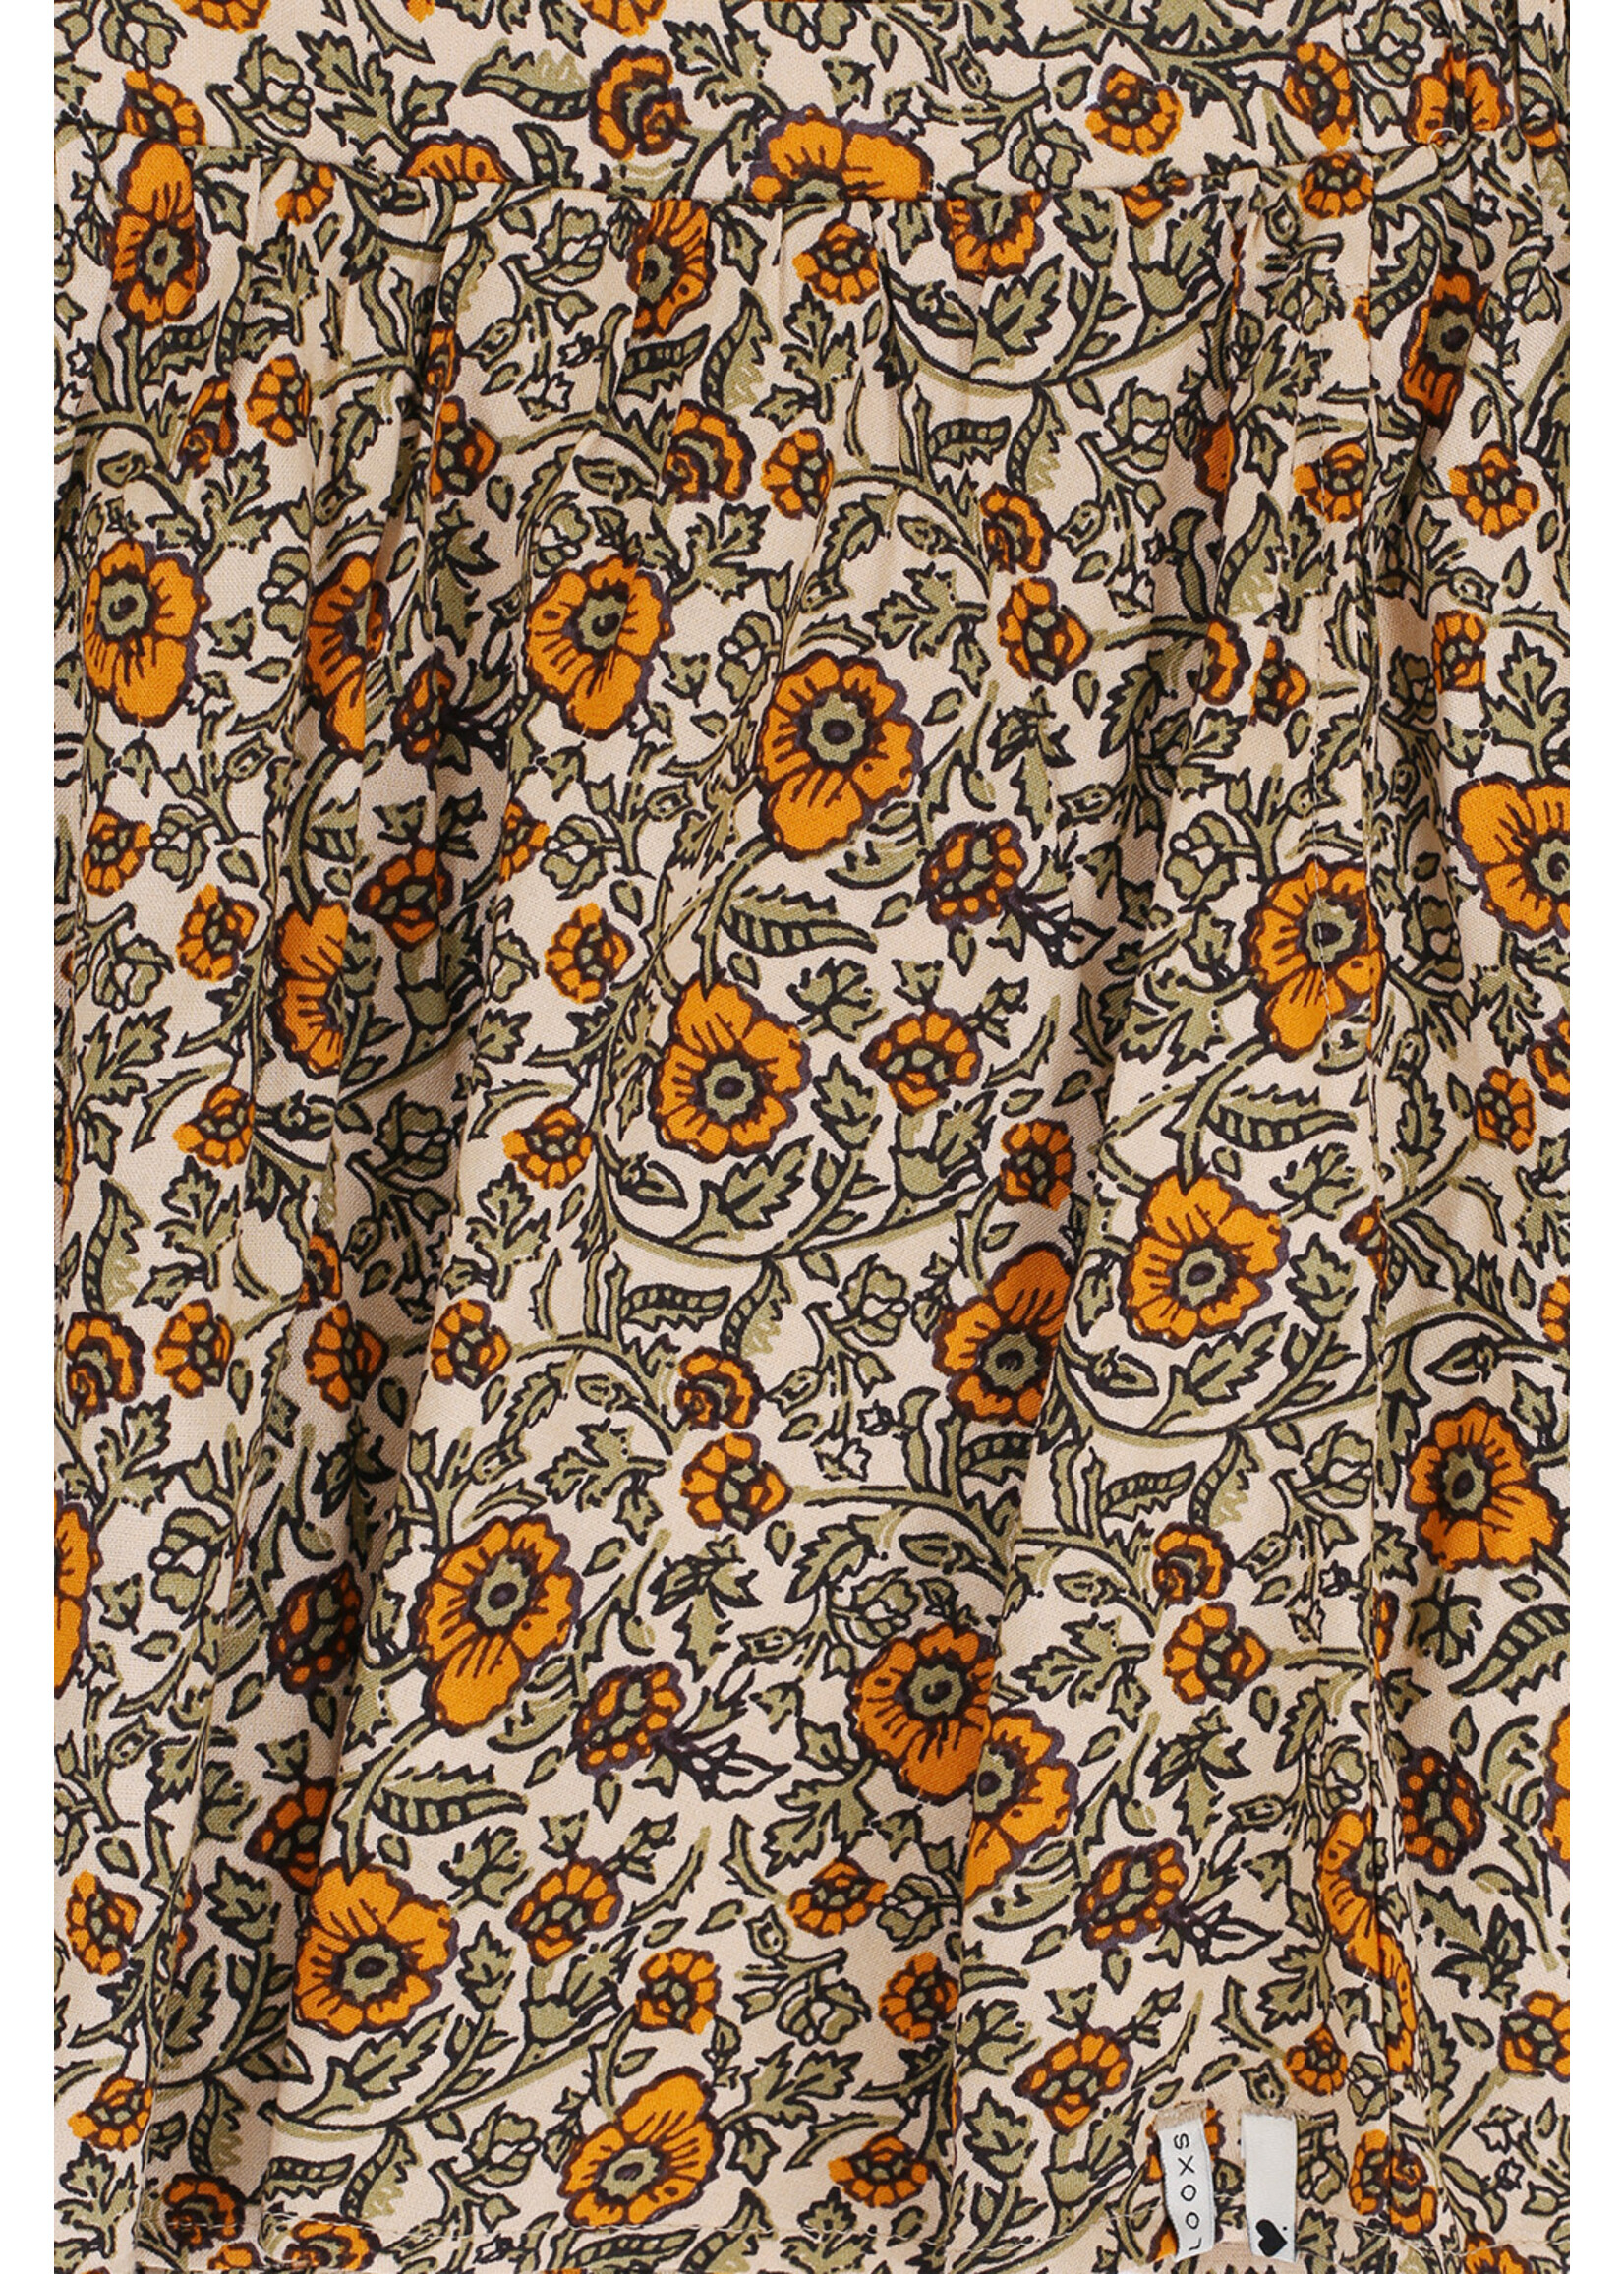 LOOXS Little Little skirt Orange Floral